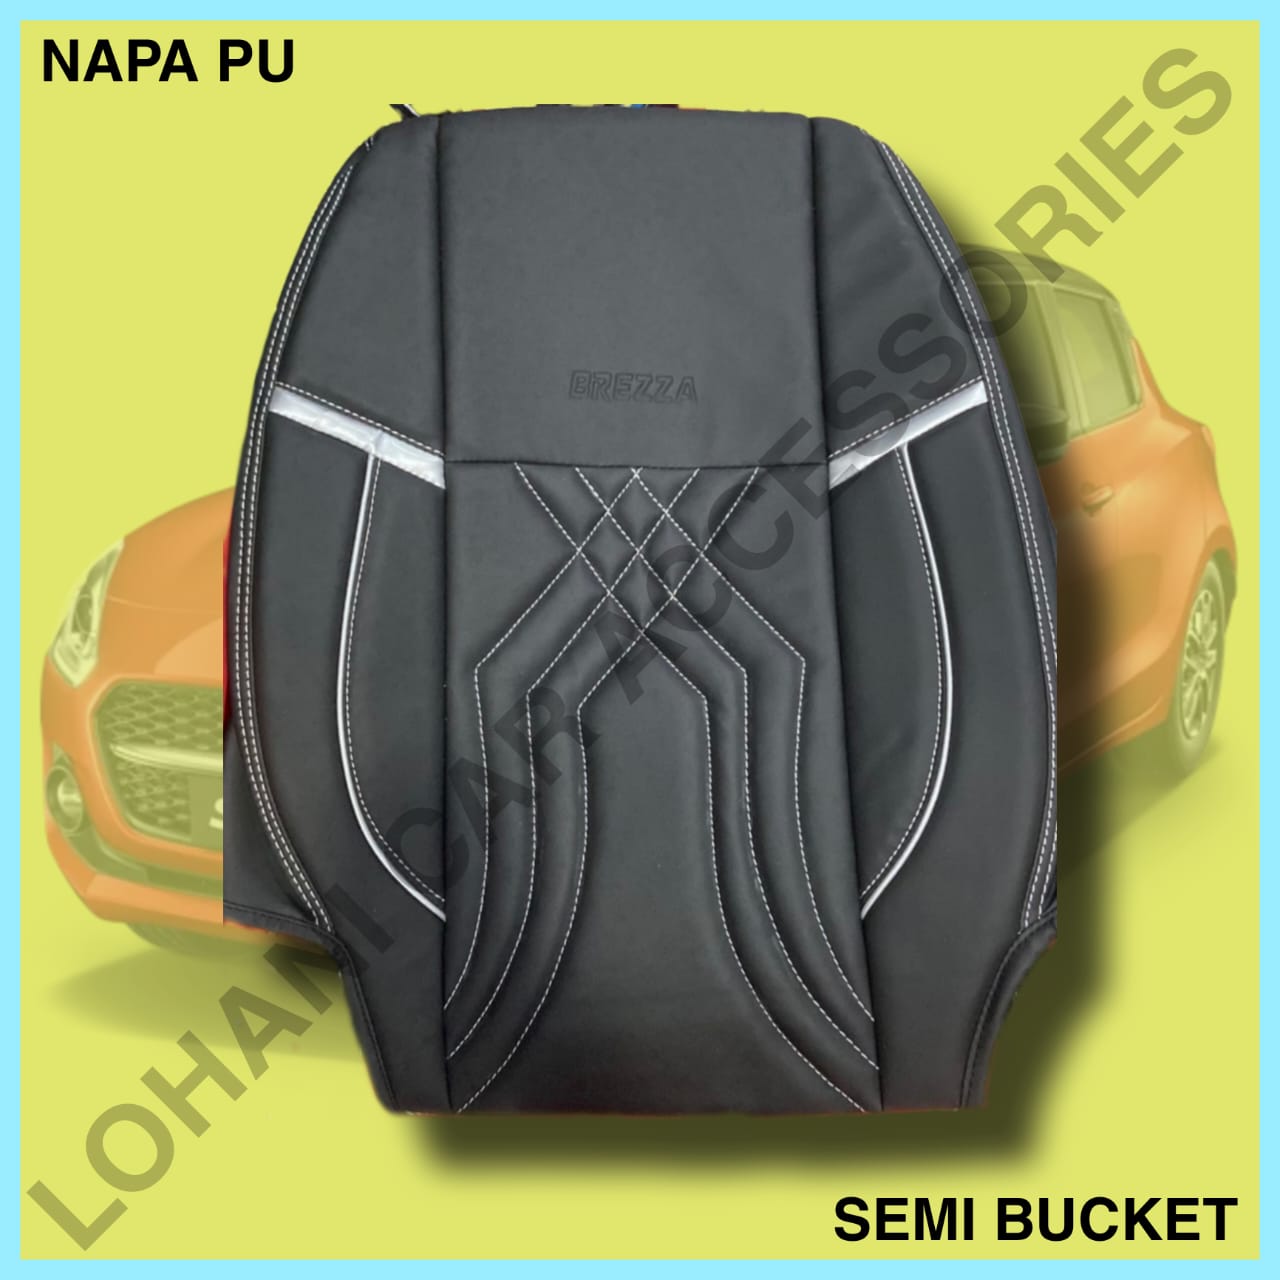 Napa-Pu Seat Cover